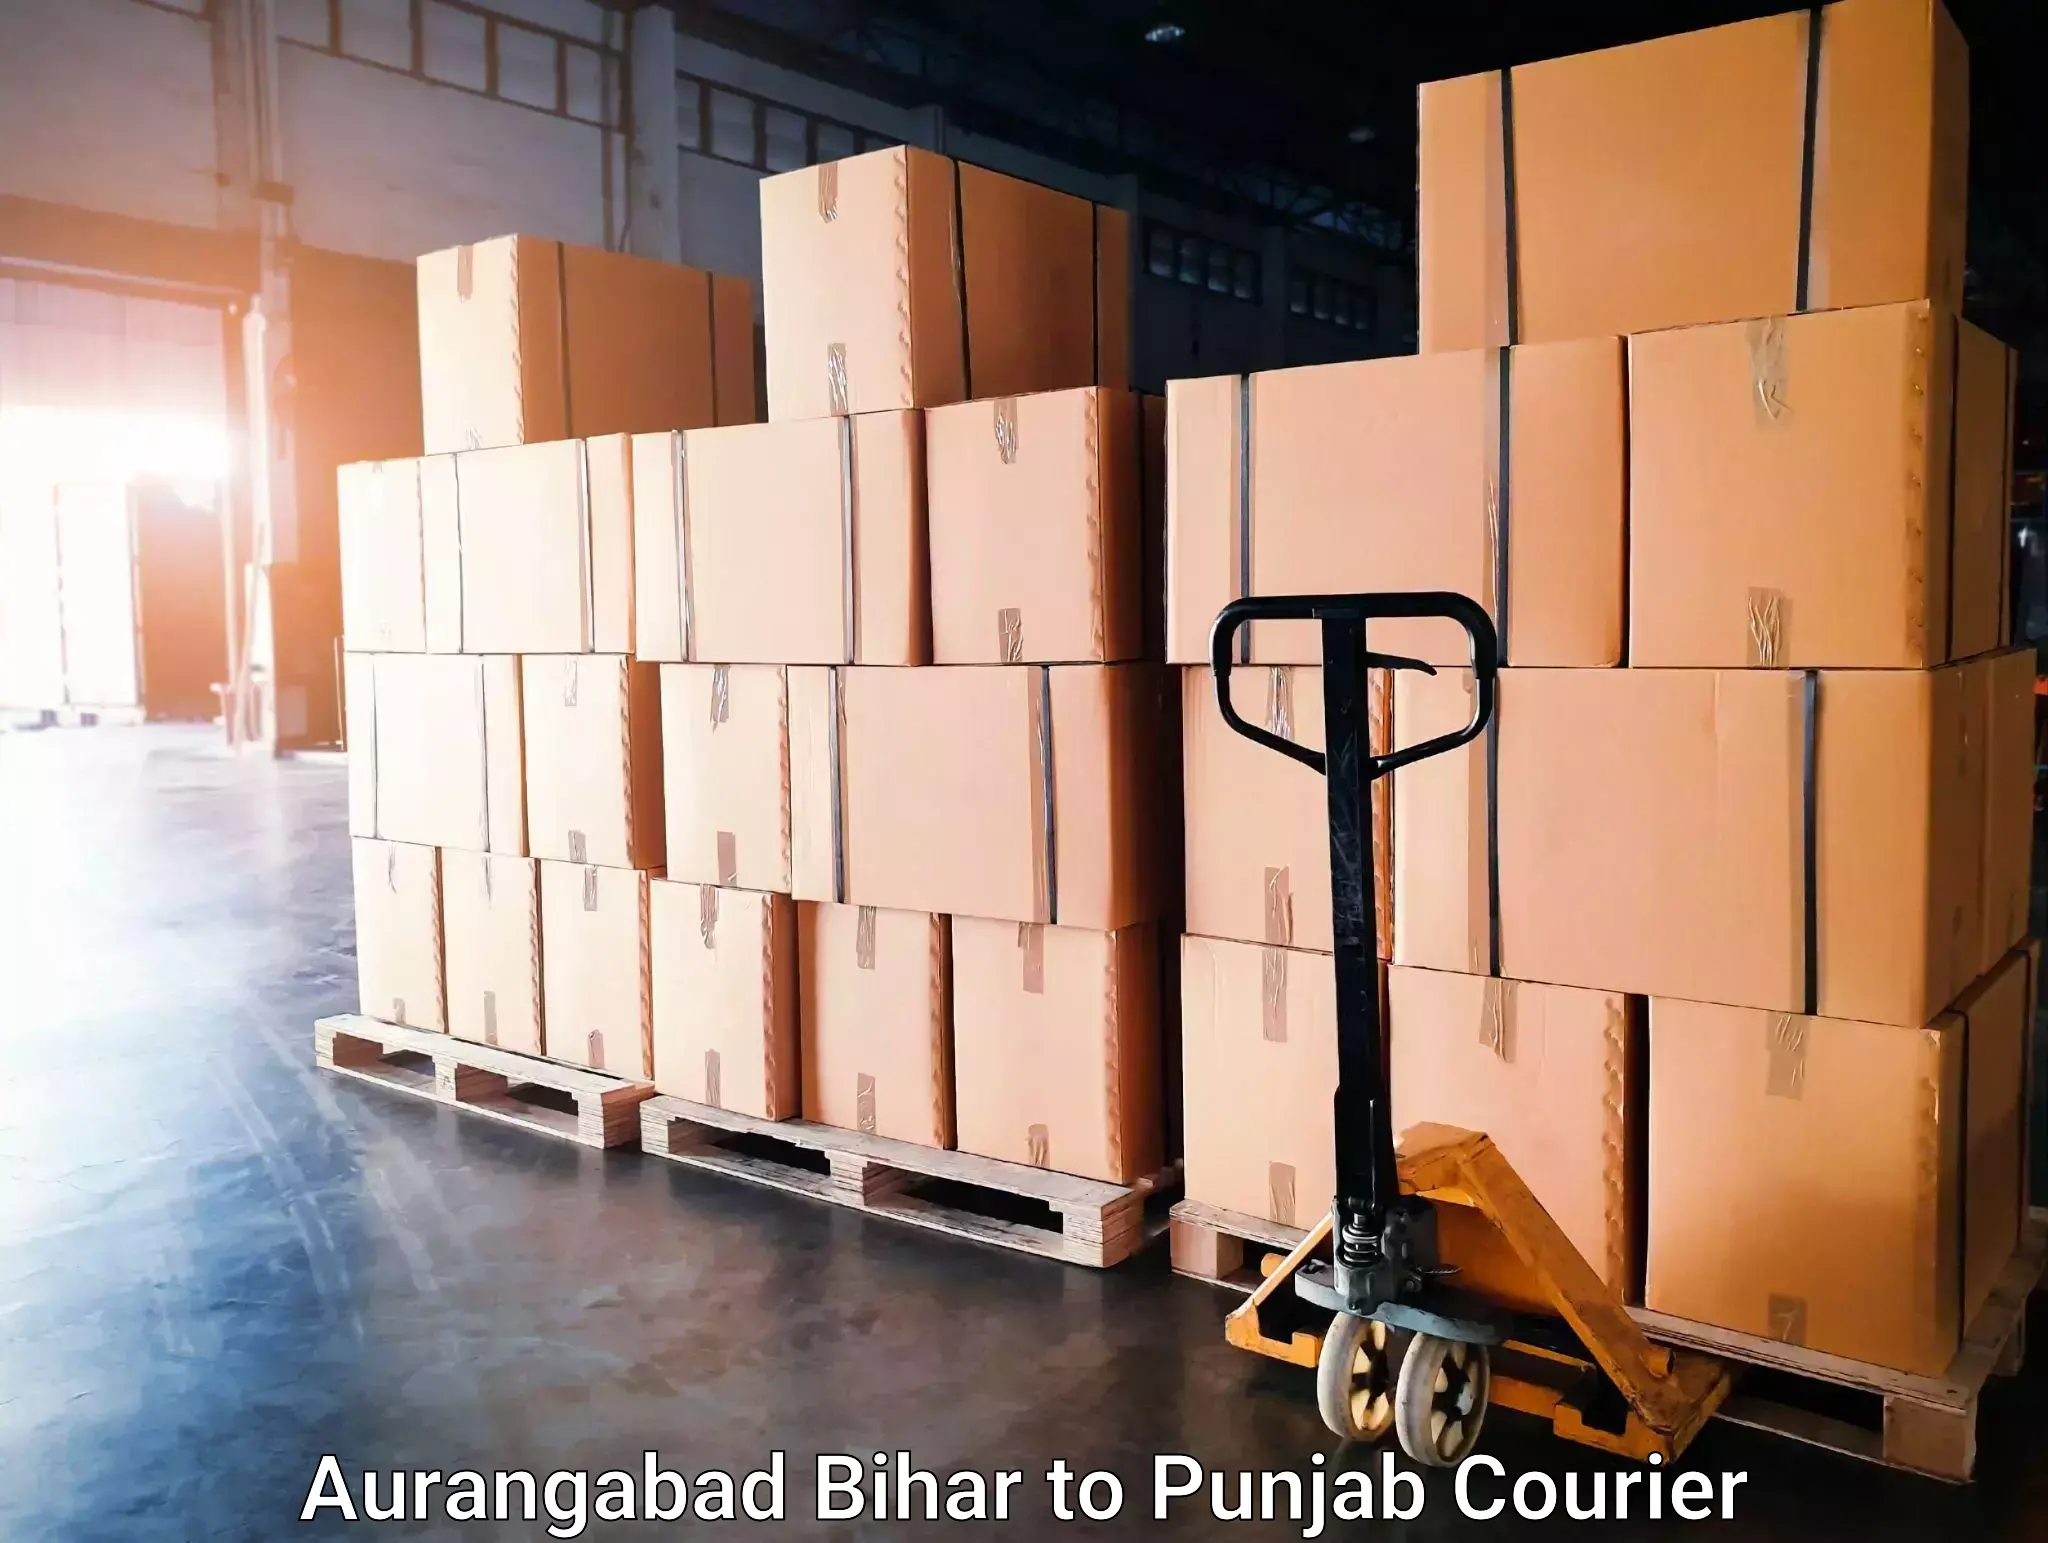 Furniture moving experts Aurangabad Bihar to Punjab